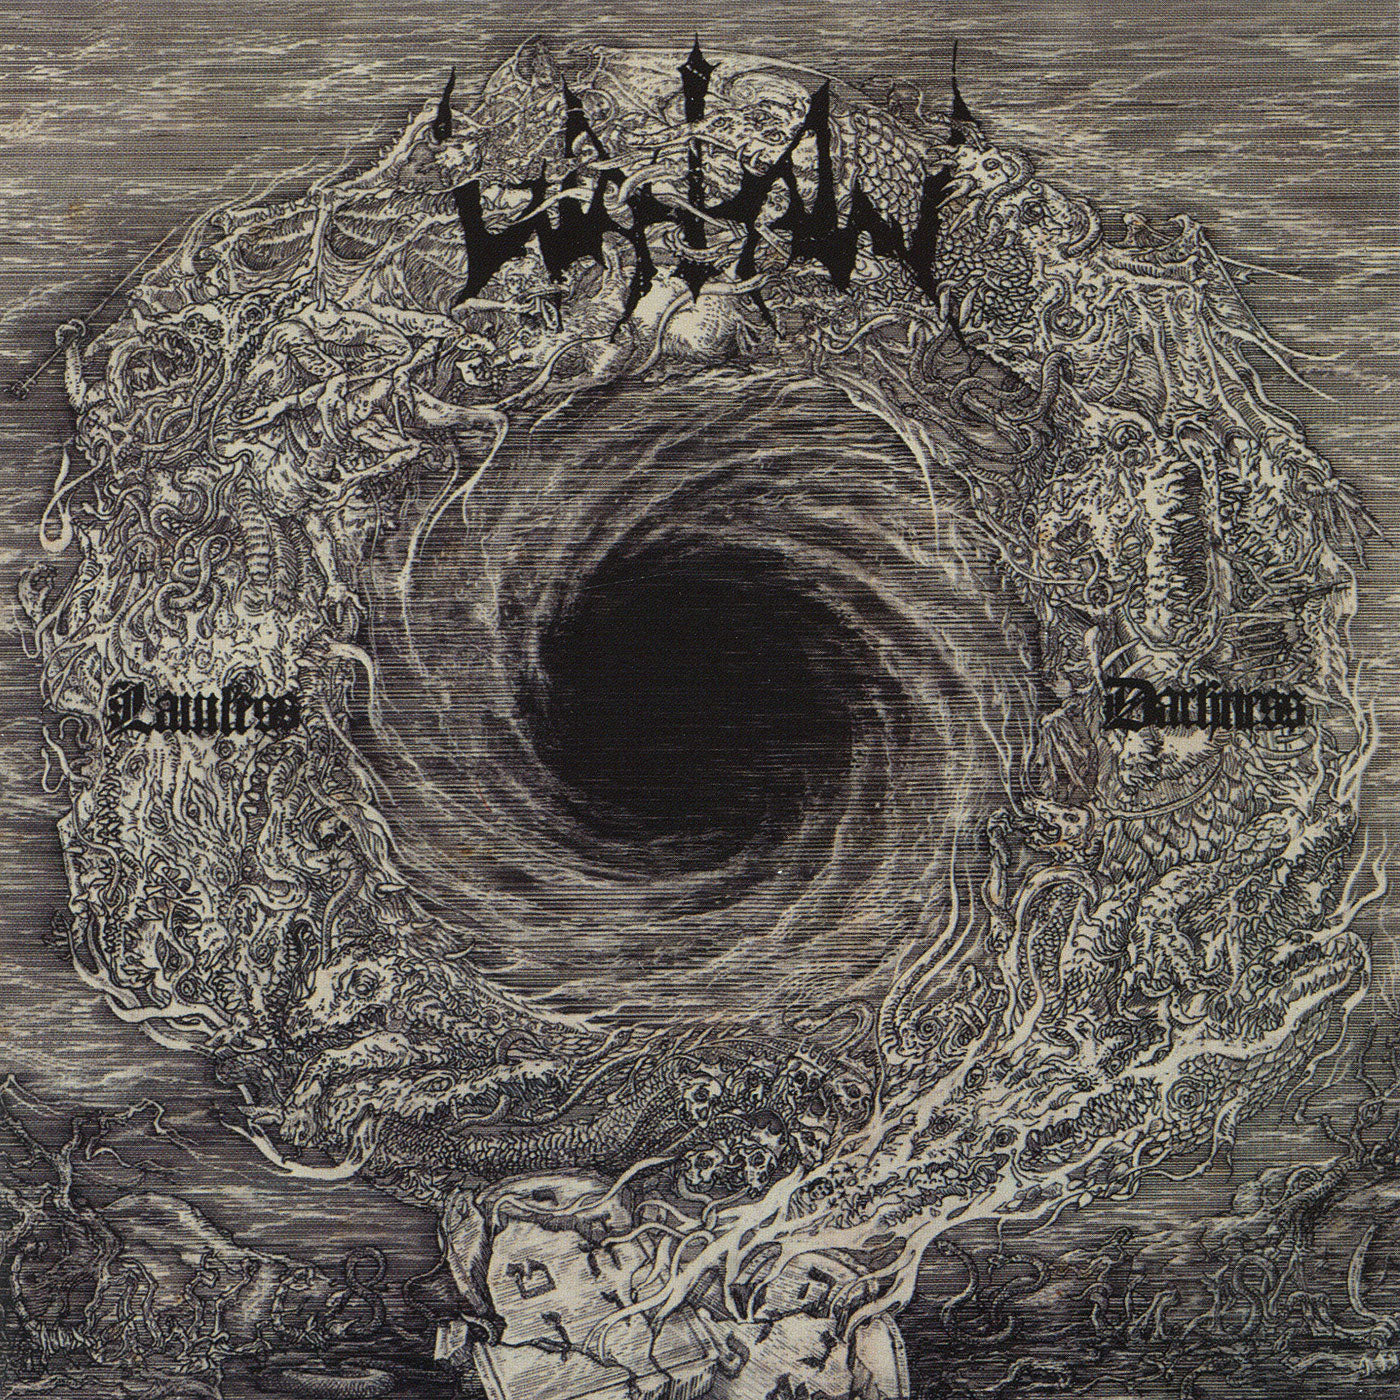 Watain - Lawless Darkness (CD)